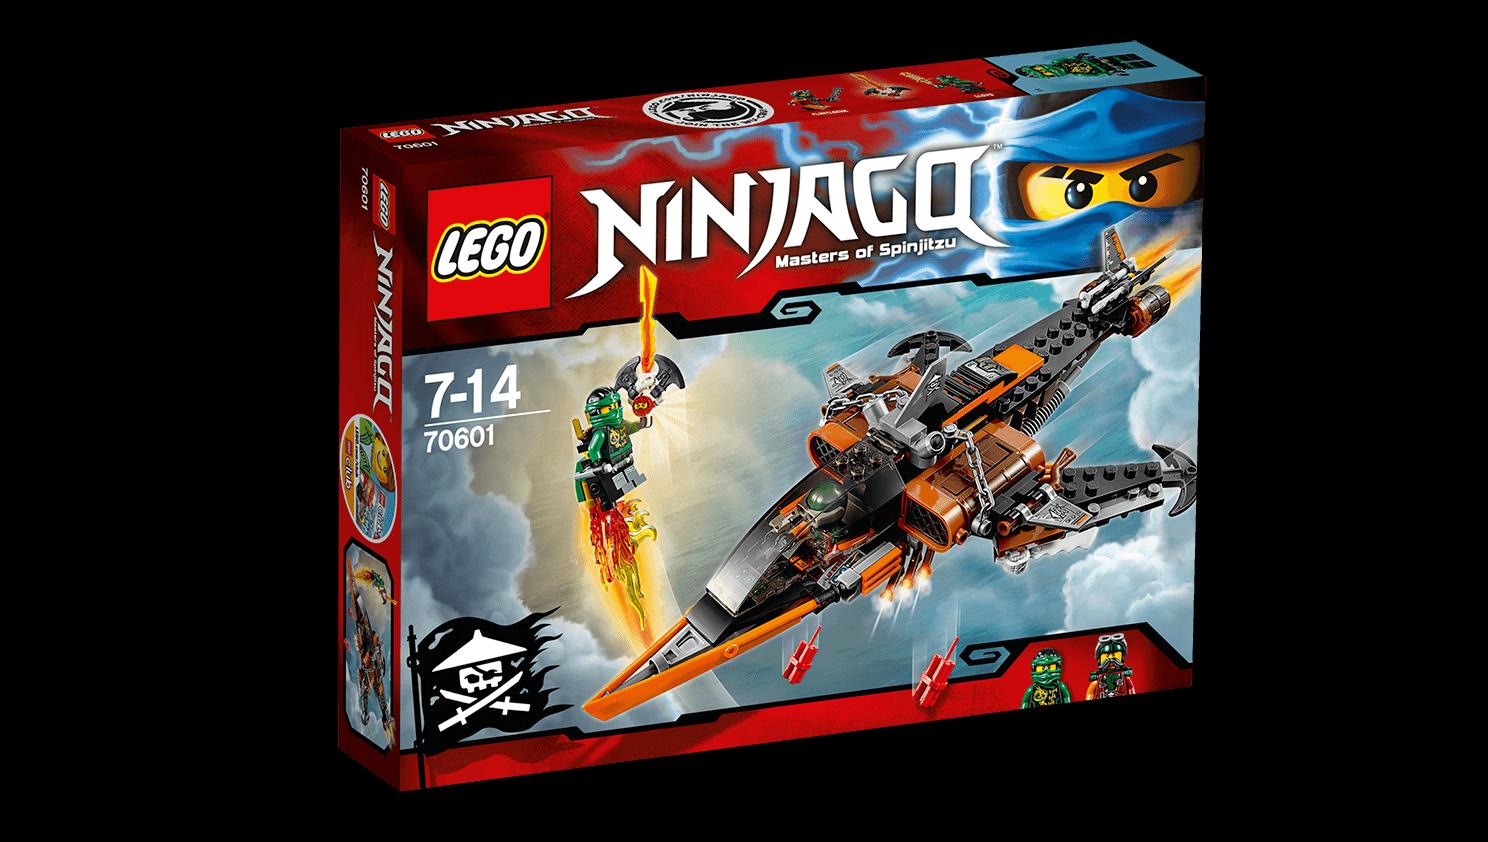 Lego Ninjago Sky Shark 7-14 ani 